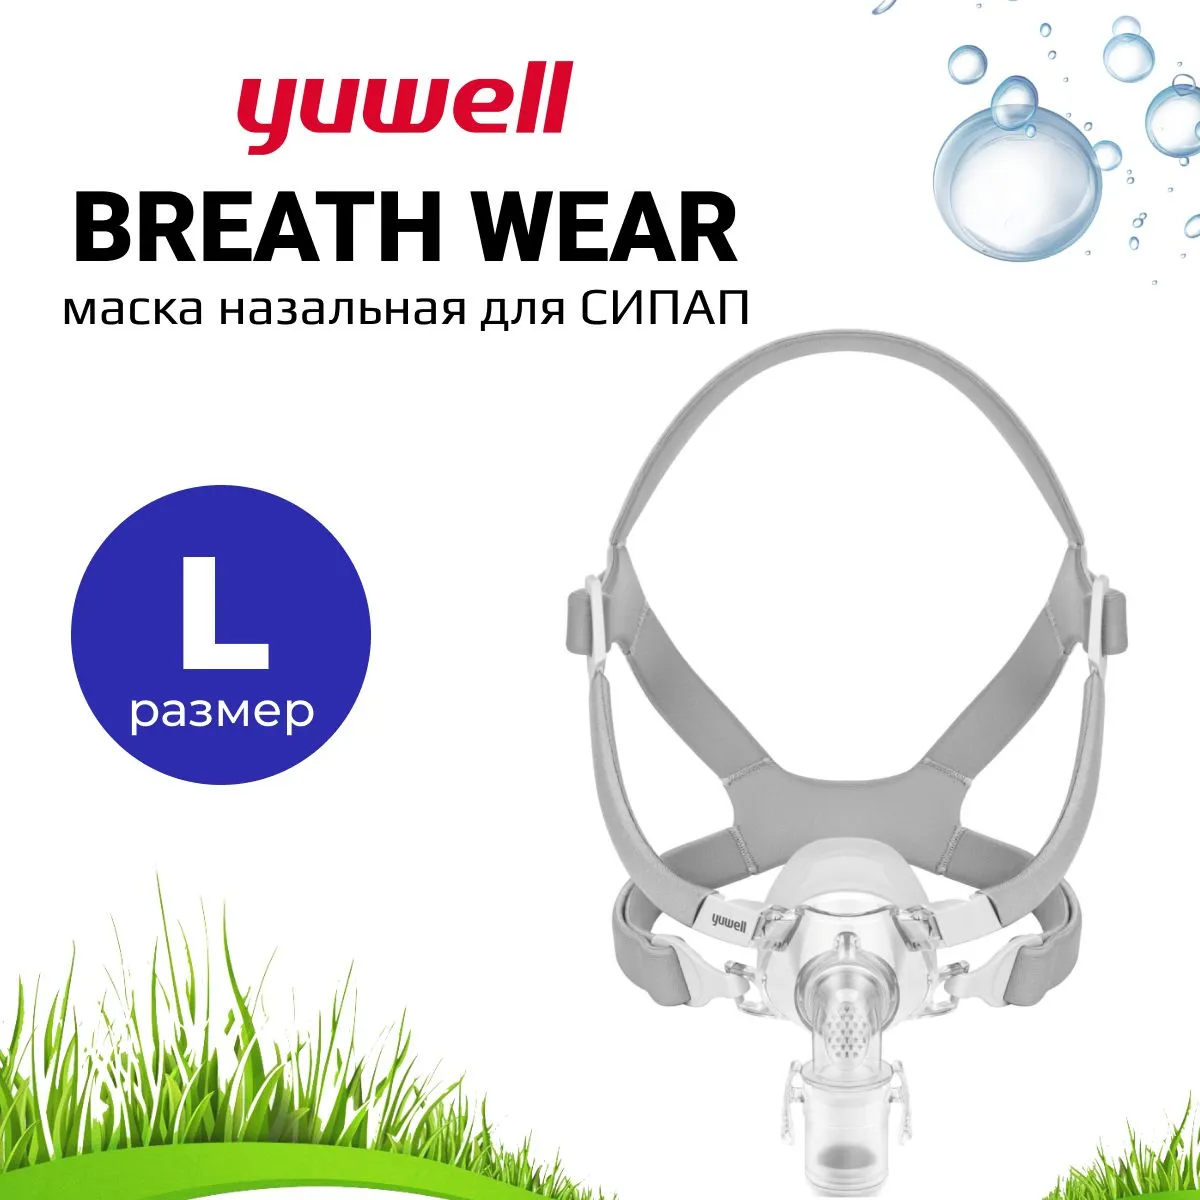 Назальная Маска Yuwell BreathWear Series YN-03 (Размер L) для СИПАП